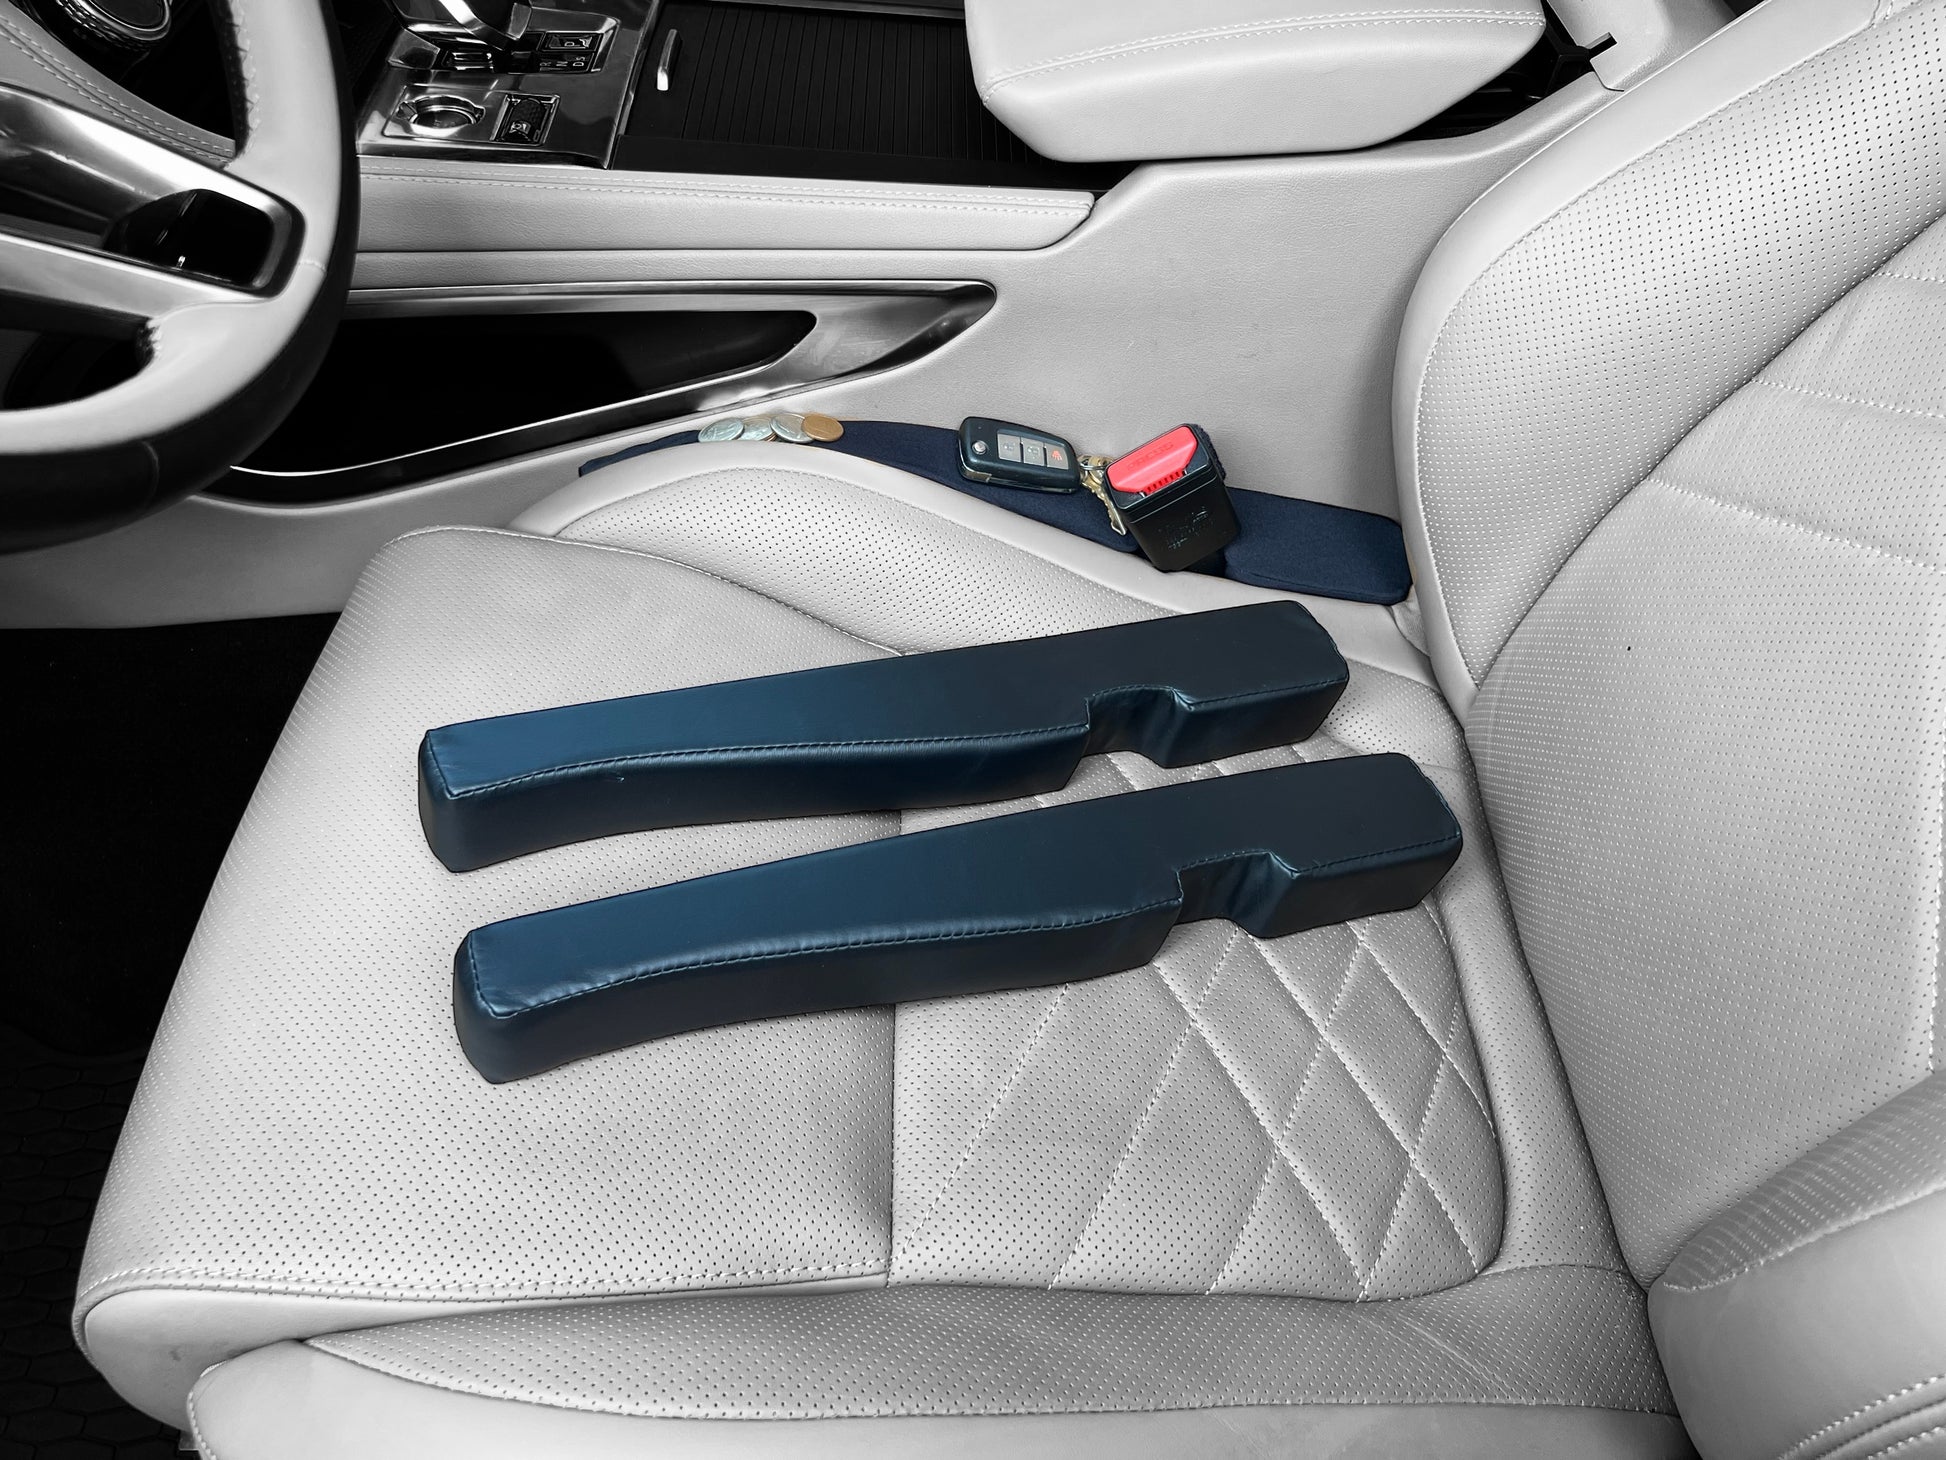 MBERFITU Car Seat Gap Filler, 2 Pack Leather Fill The Gap Between